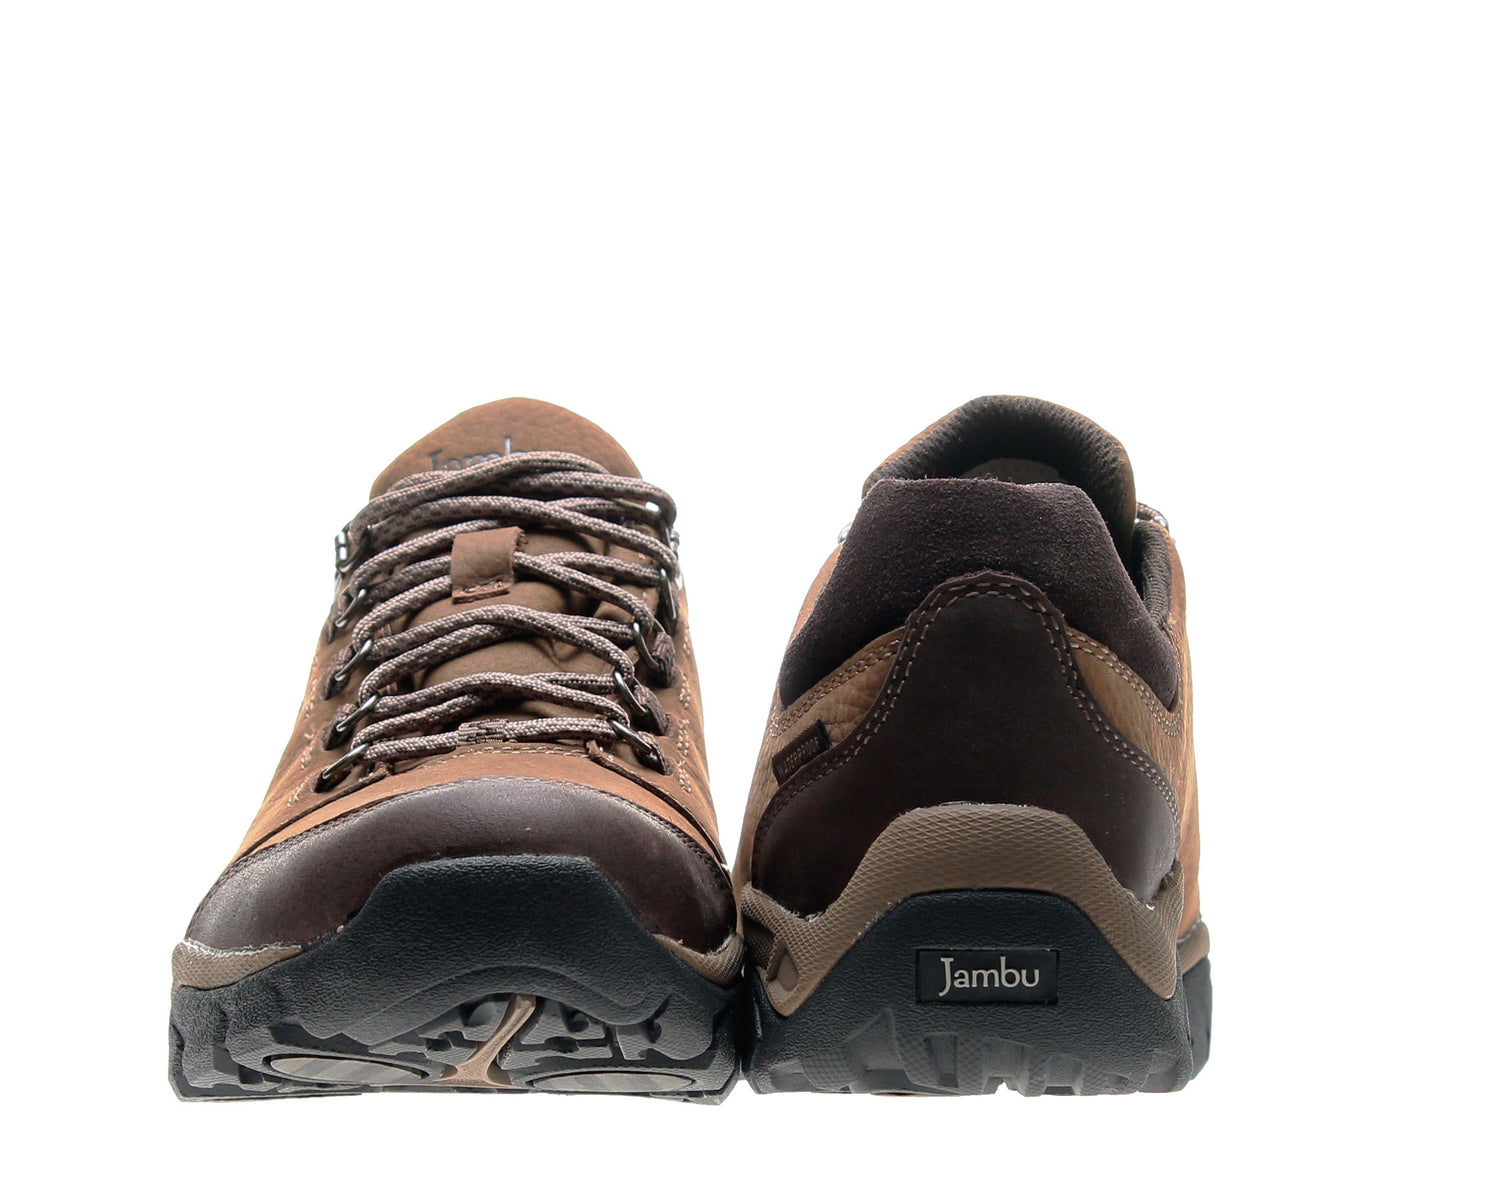 Jambu Bedrock-Hyper Grip Men's Shoes